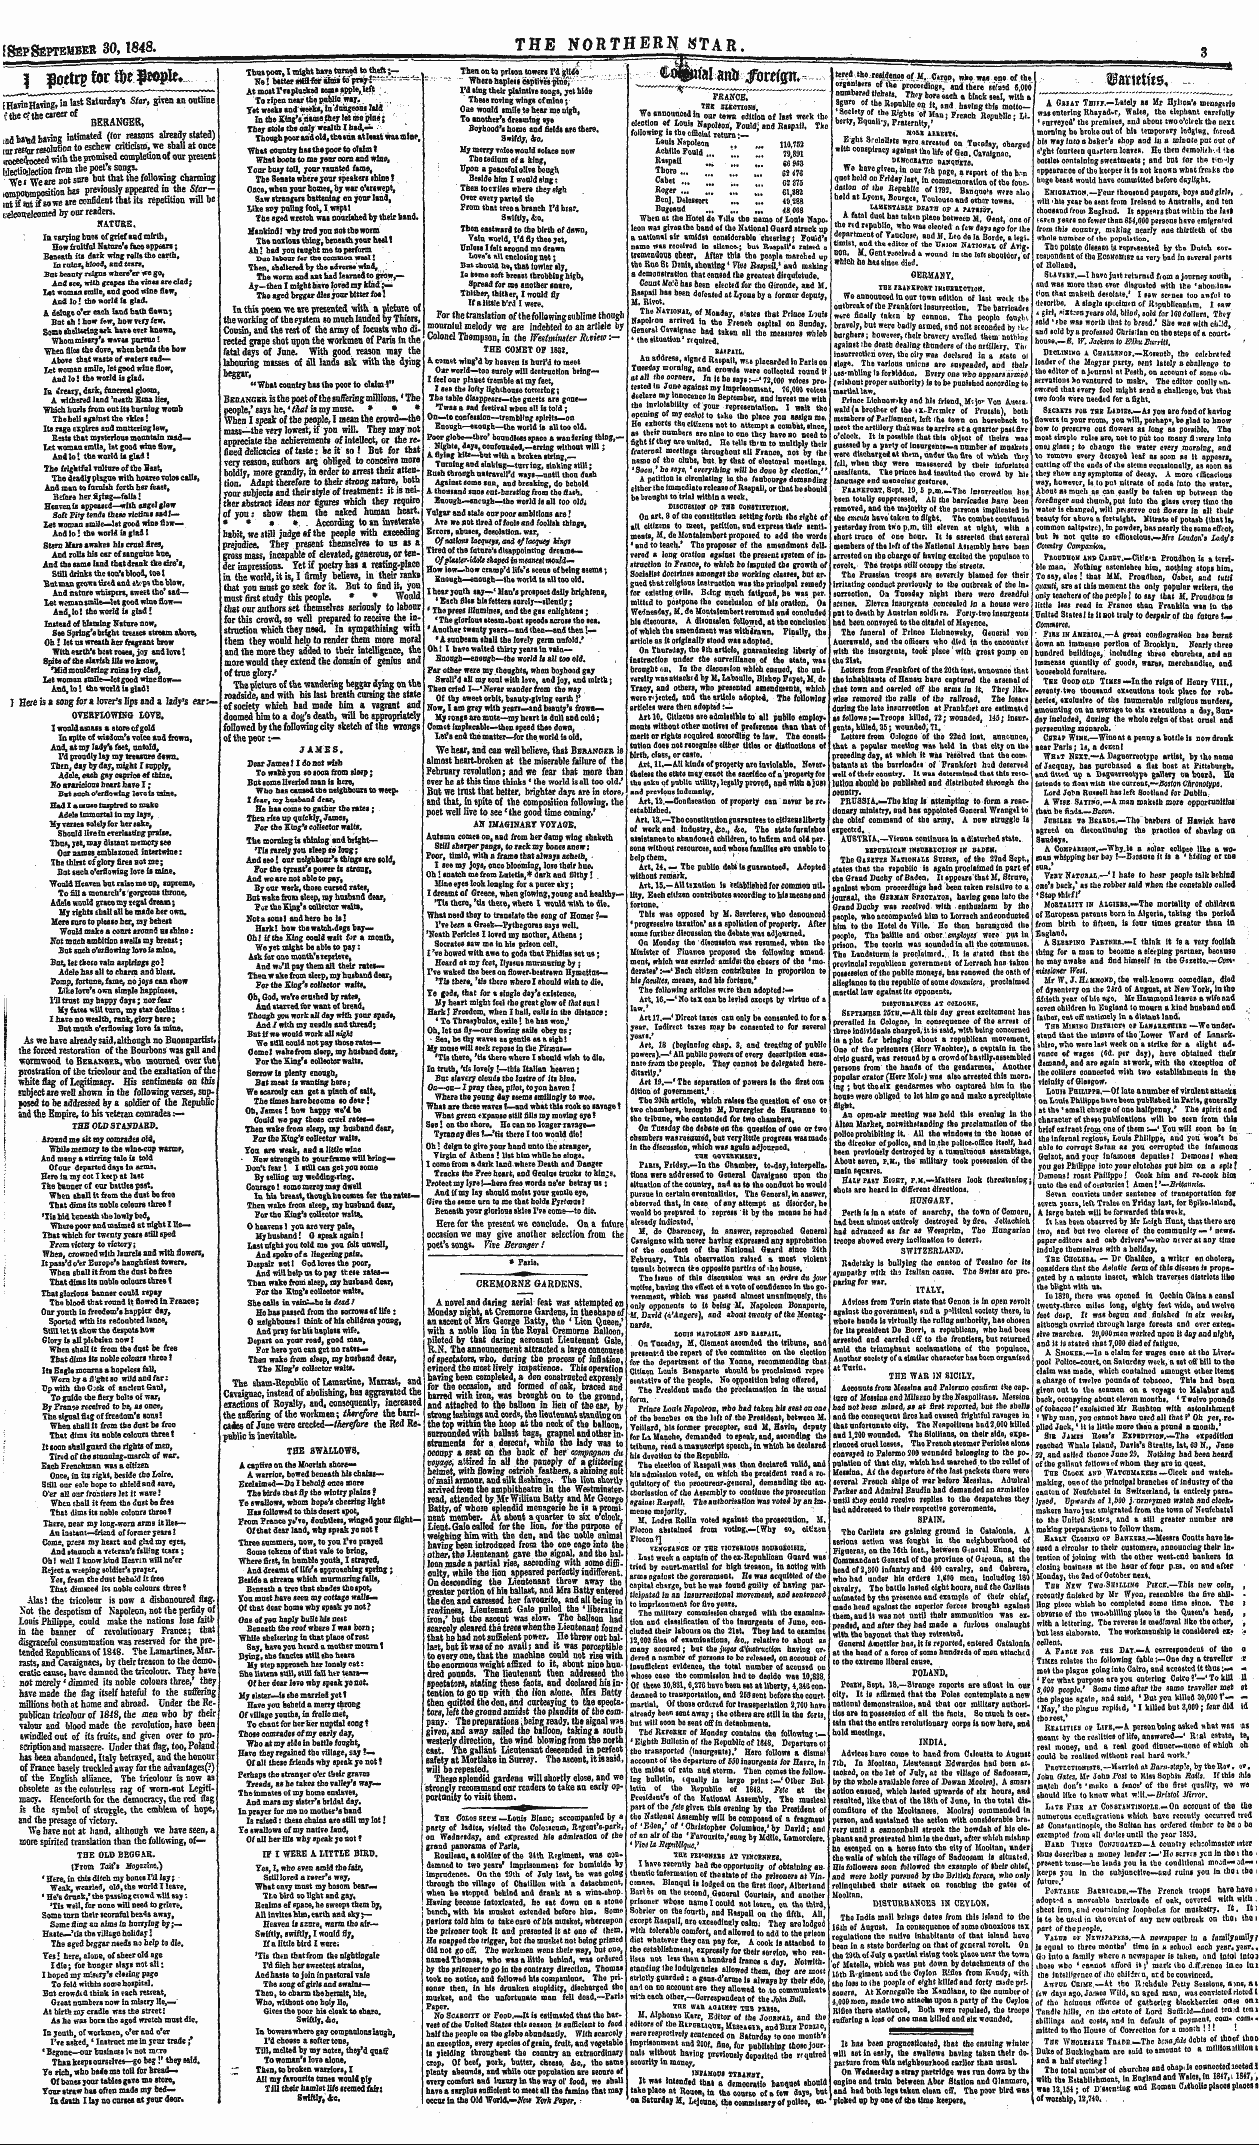 Northern Star (1837-1852): jS F Y, 2nd edition - Ehavinhavbi& In Last Saturdays Star, Giv...